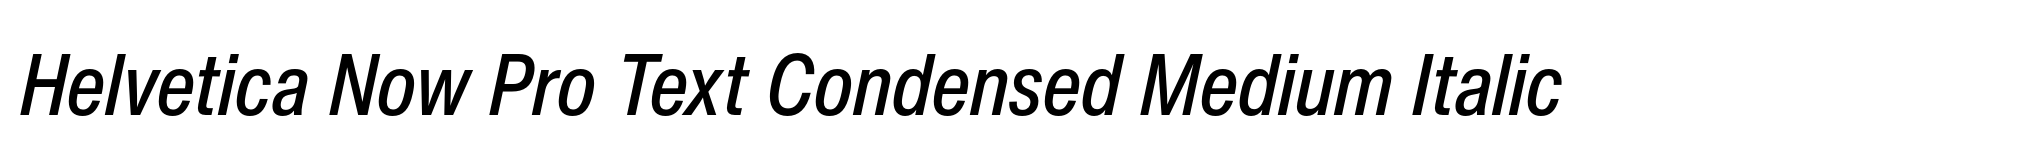 Helvetica Now Pro Text Condensed Medium Italic image